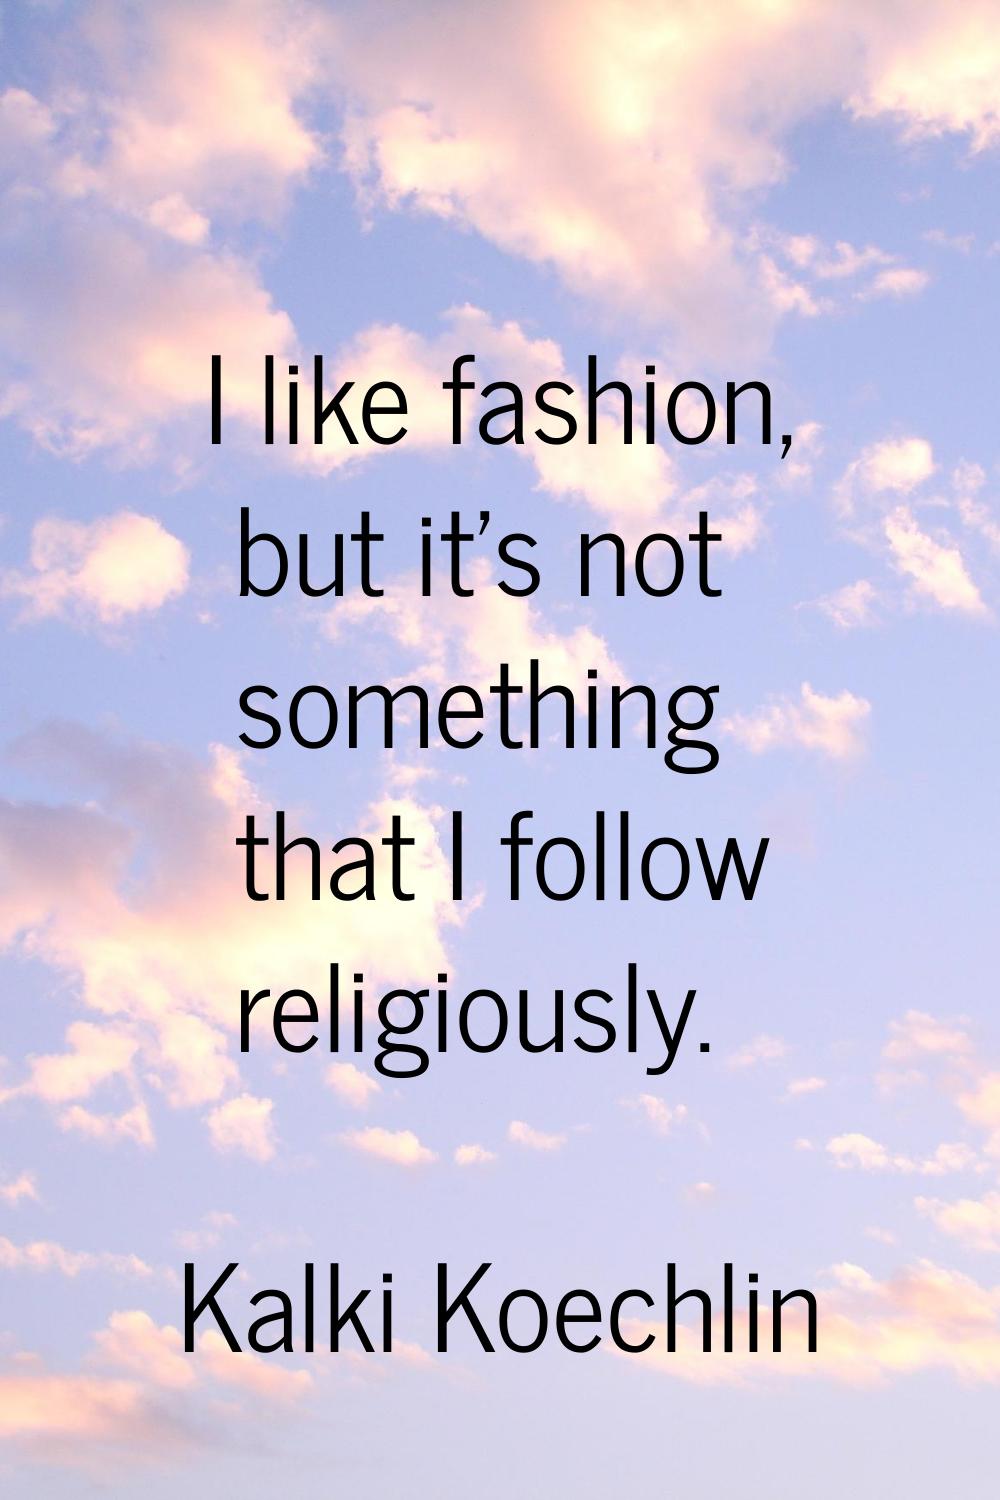 I like fashion, but it's not something that I follow religiously.